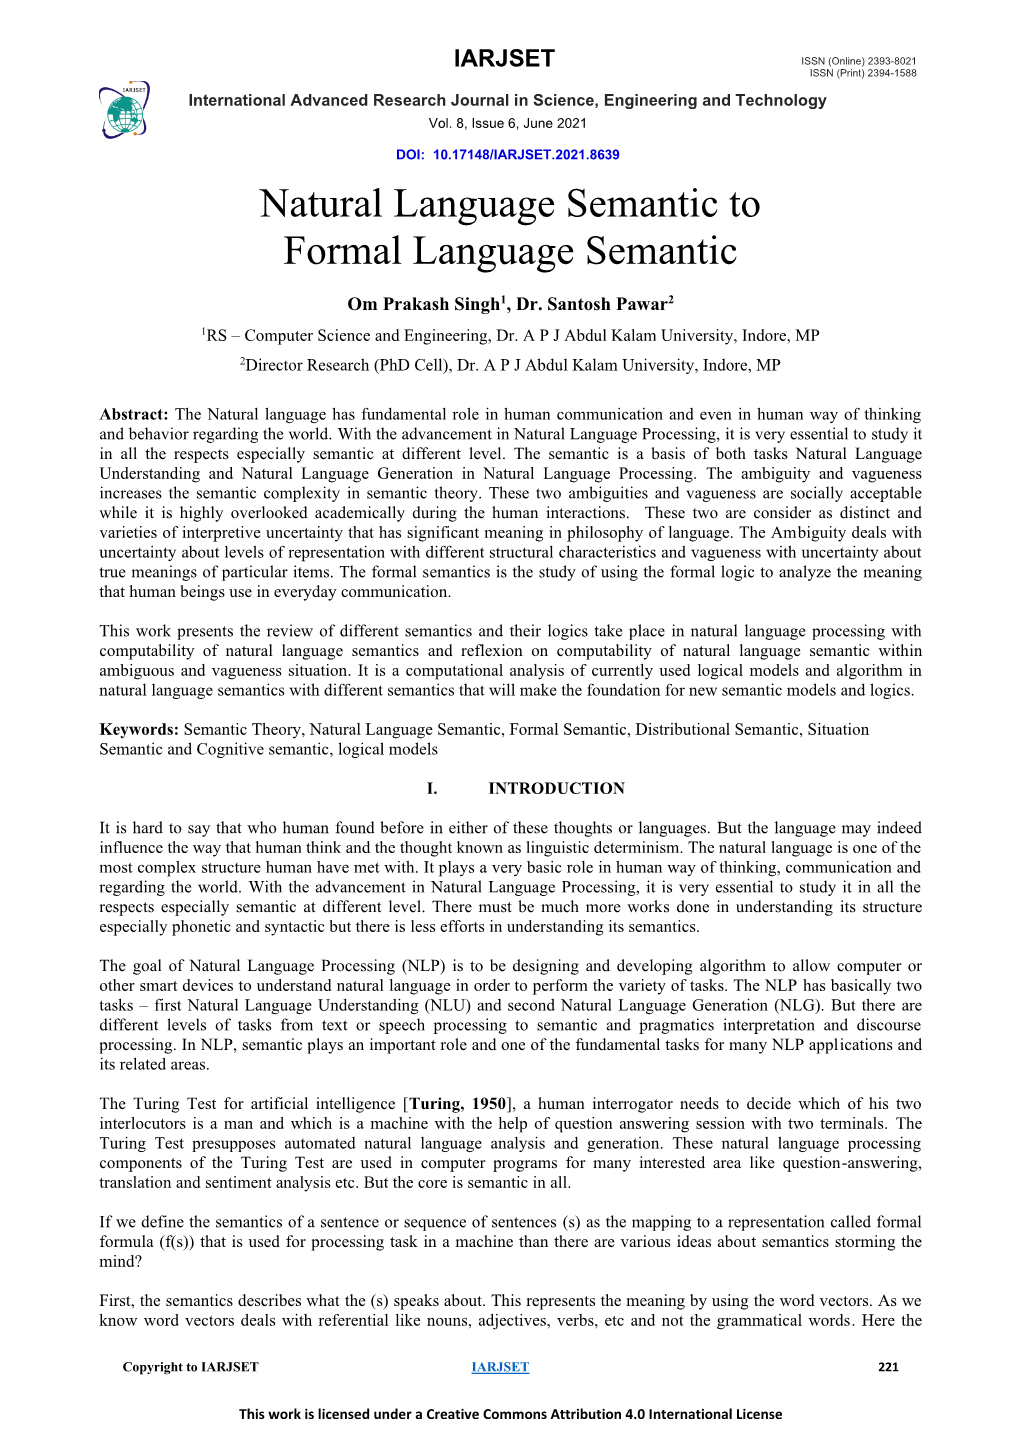 Natural Language Semantic to Formal Language Semantic